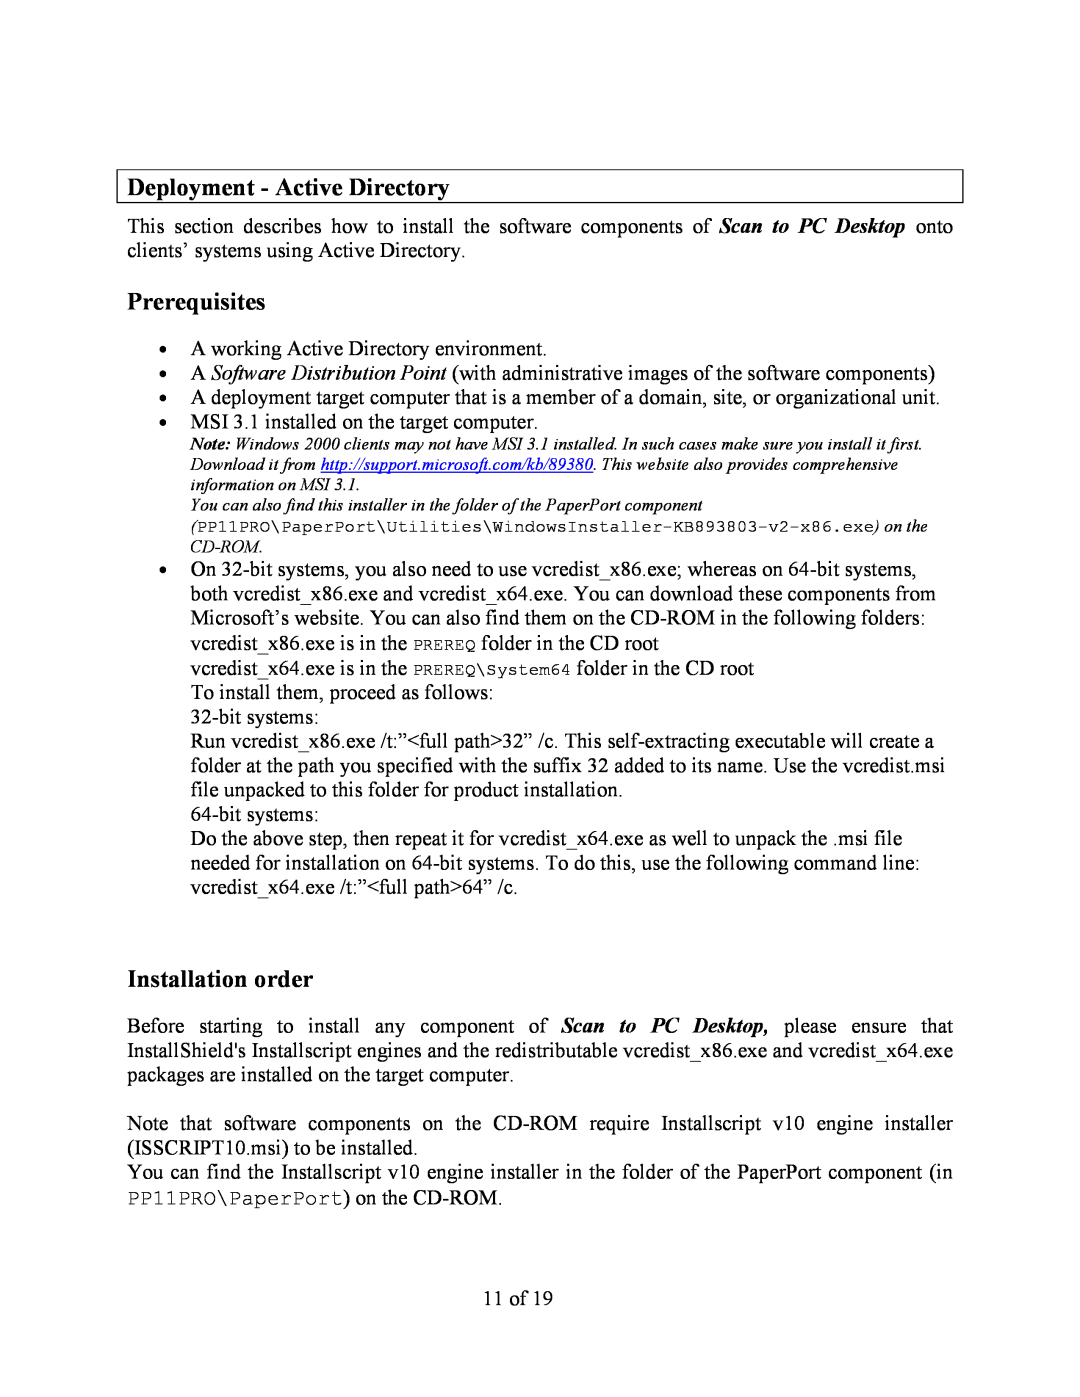 Xerox 10 manual Deployment - Active Directory, Prerequisites, Installation order 